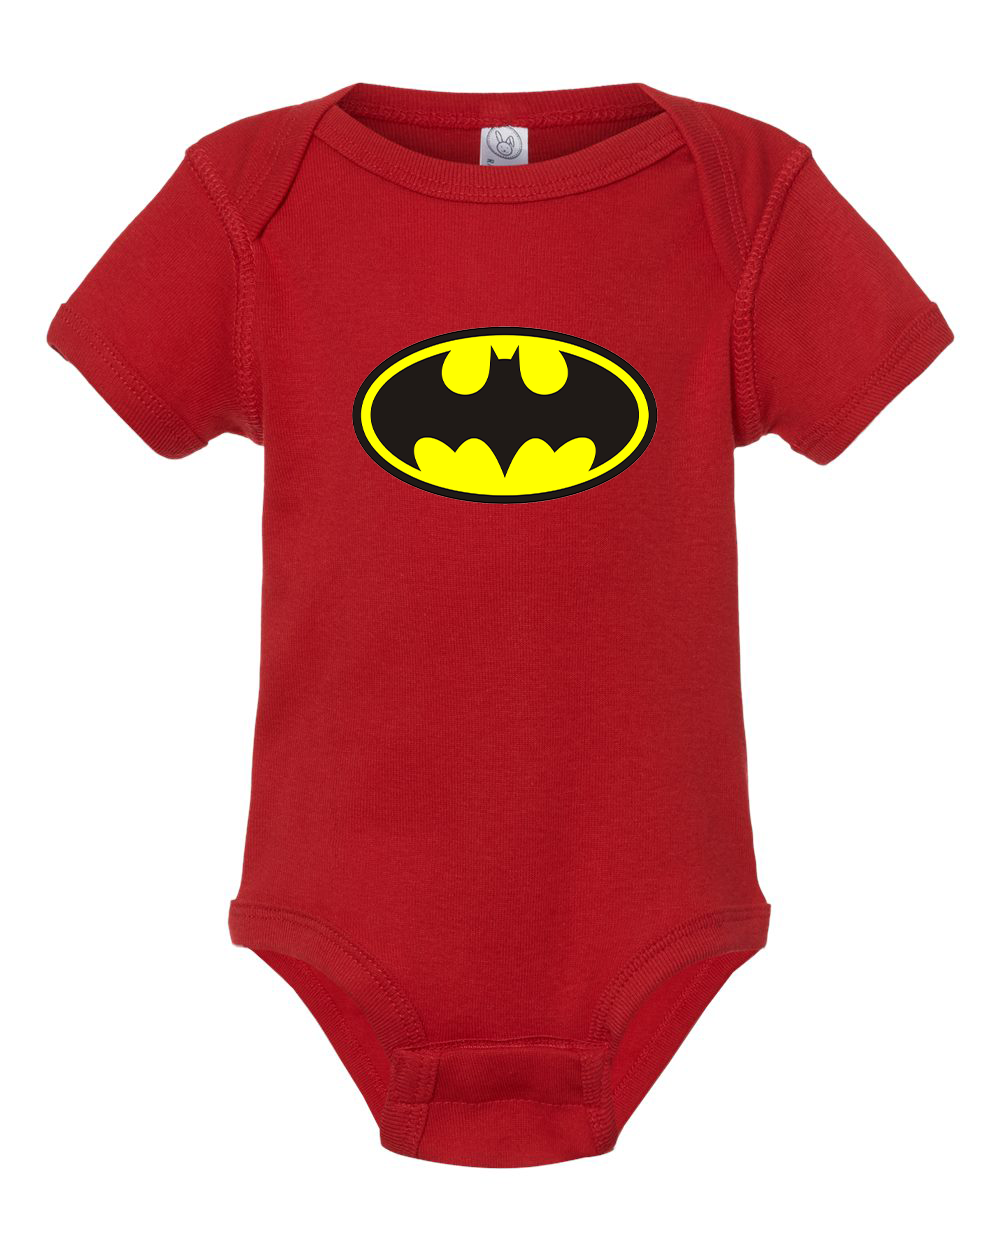 DC Comics Batman Superhero Baby Romper Onesie